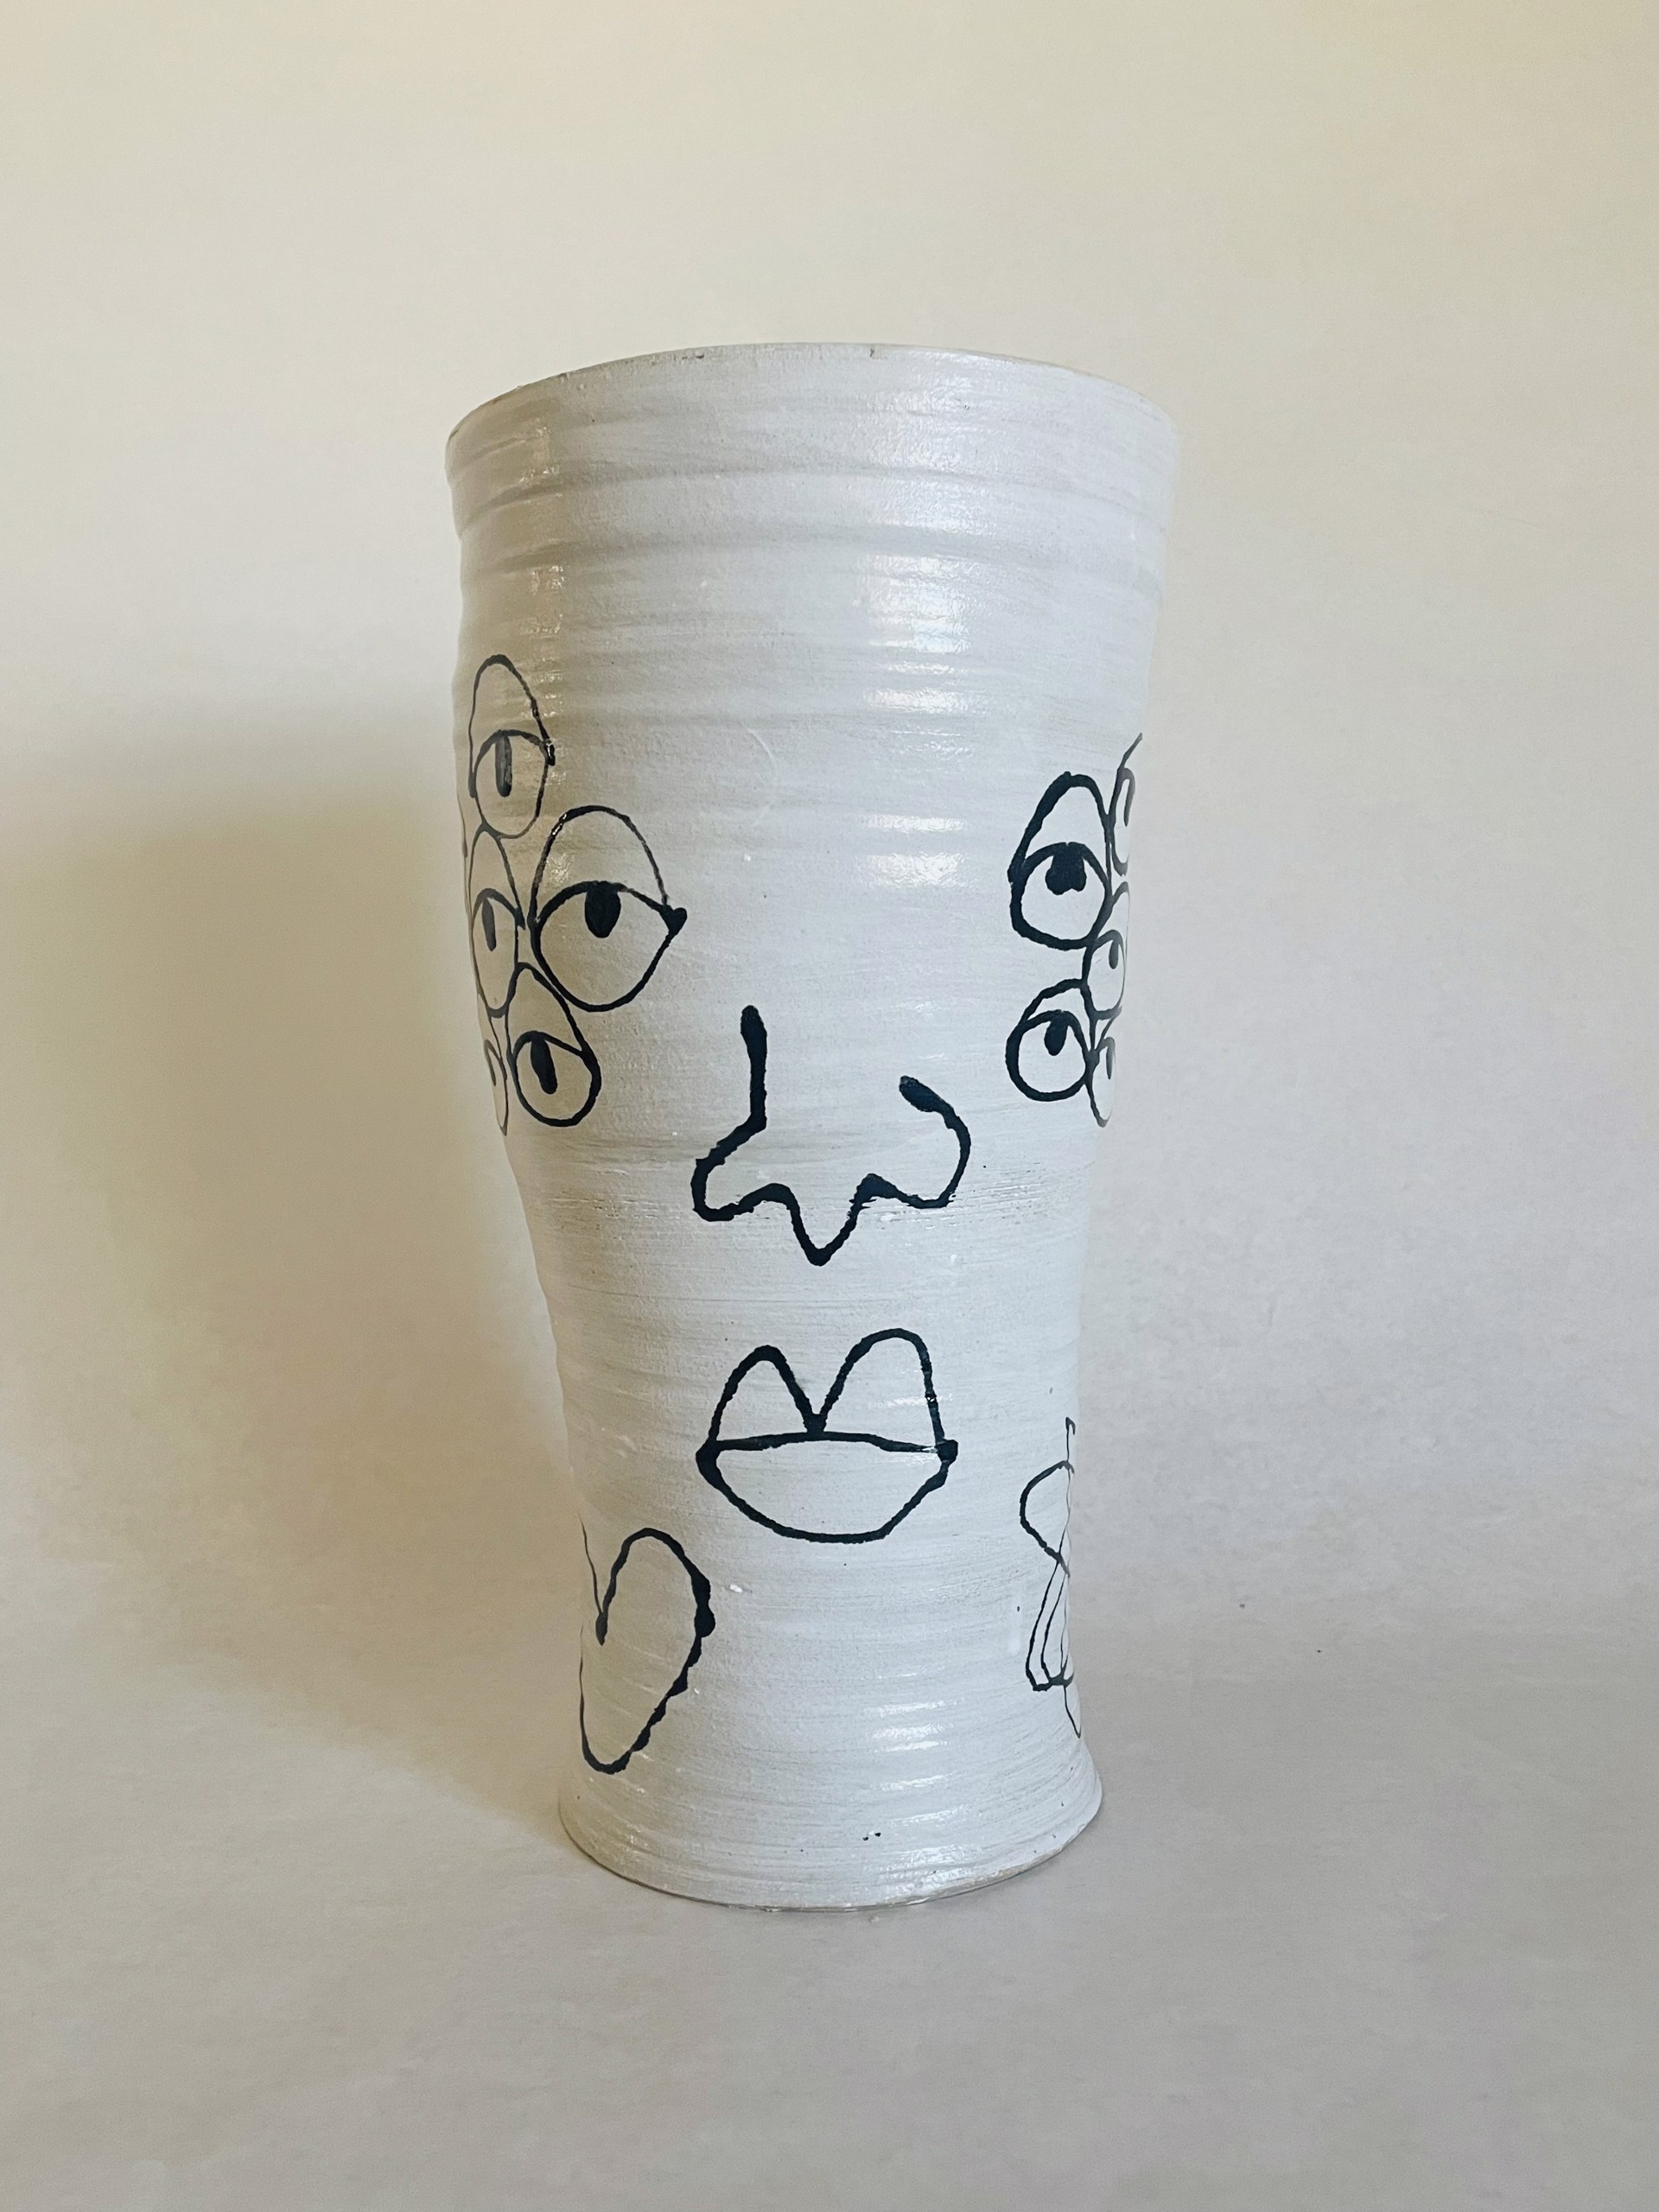 WT Face Vase 2 by Sarah Hummel Jones